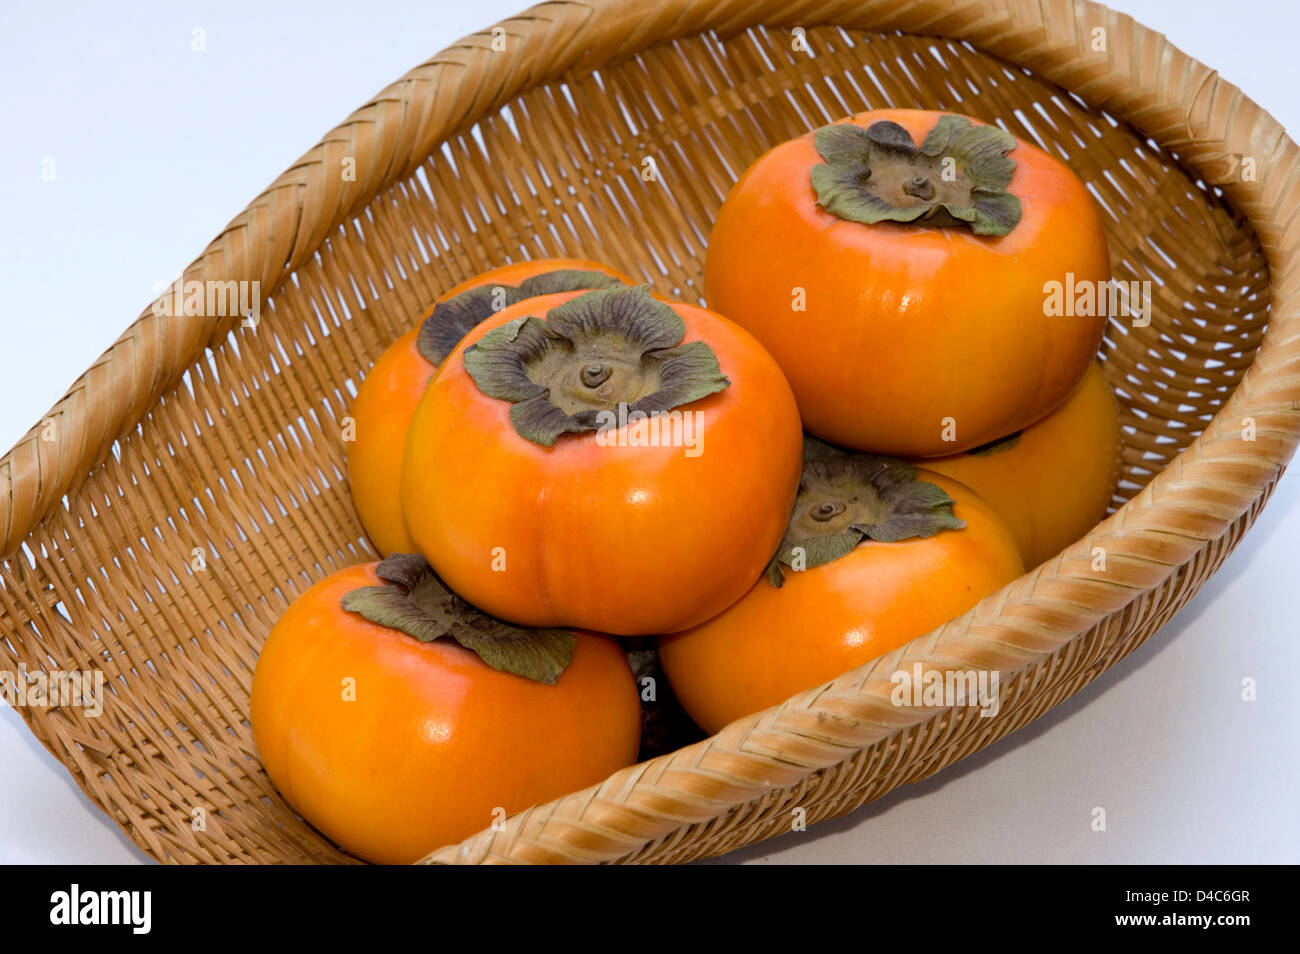 A wicker basket containing fresh Japanese 'kaki' persimmon fruit. Stock Photo